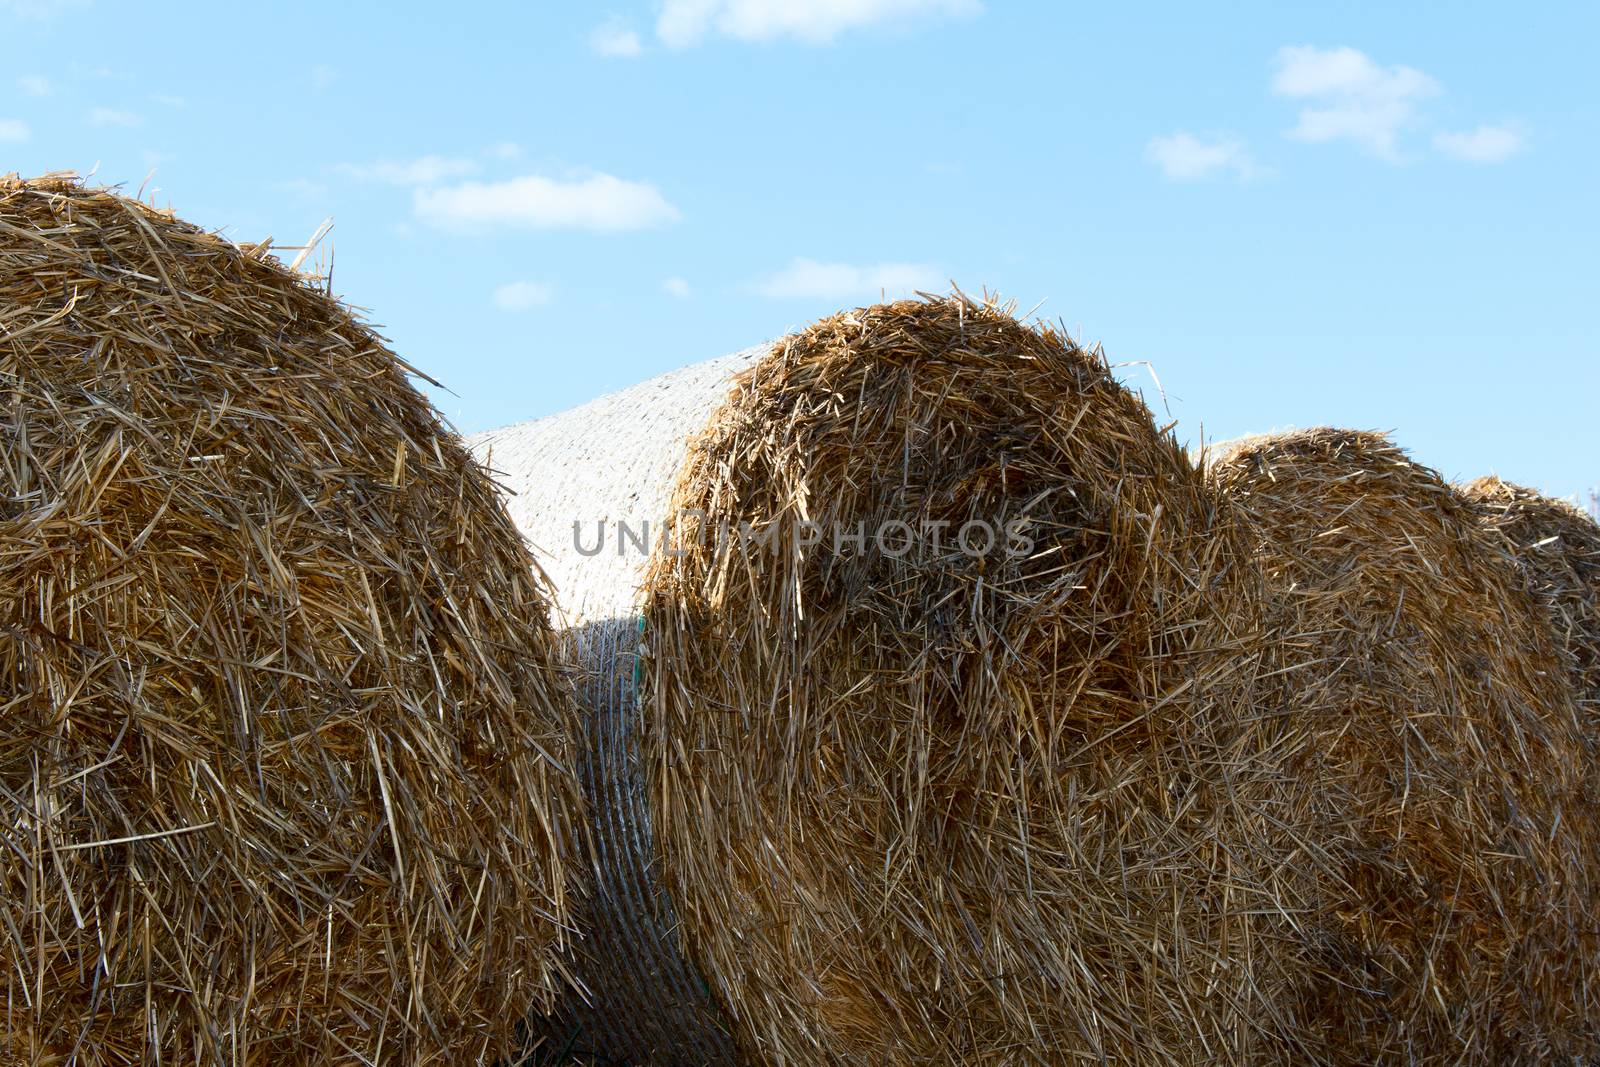 bales on hay after harvest. autumn. photo by Irinavk